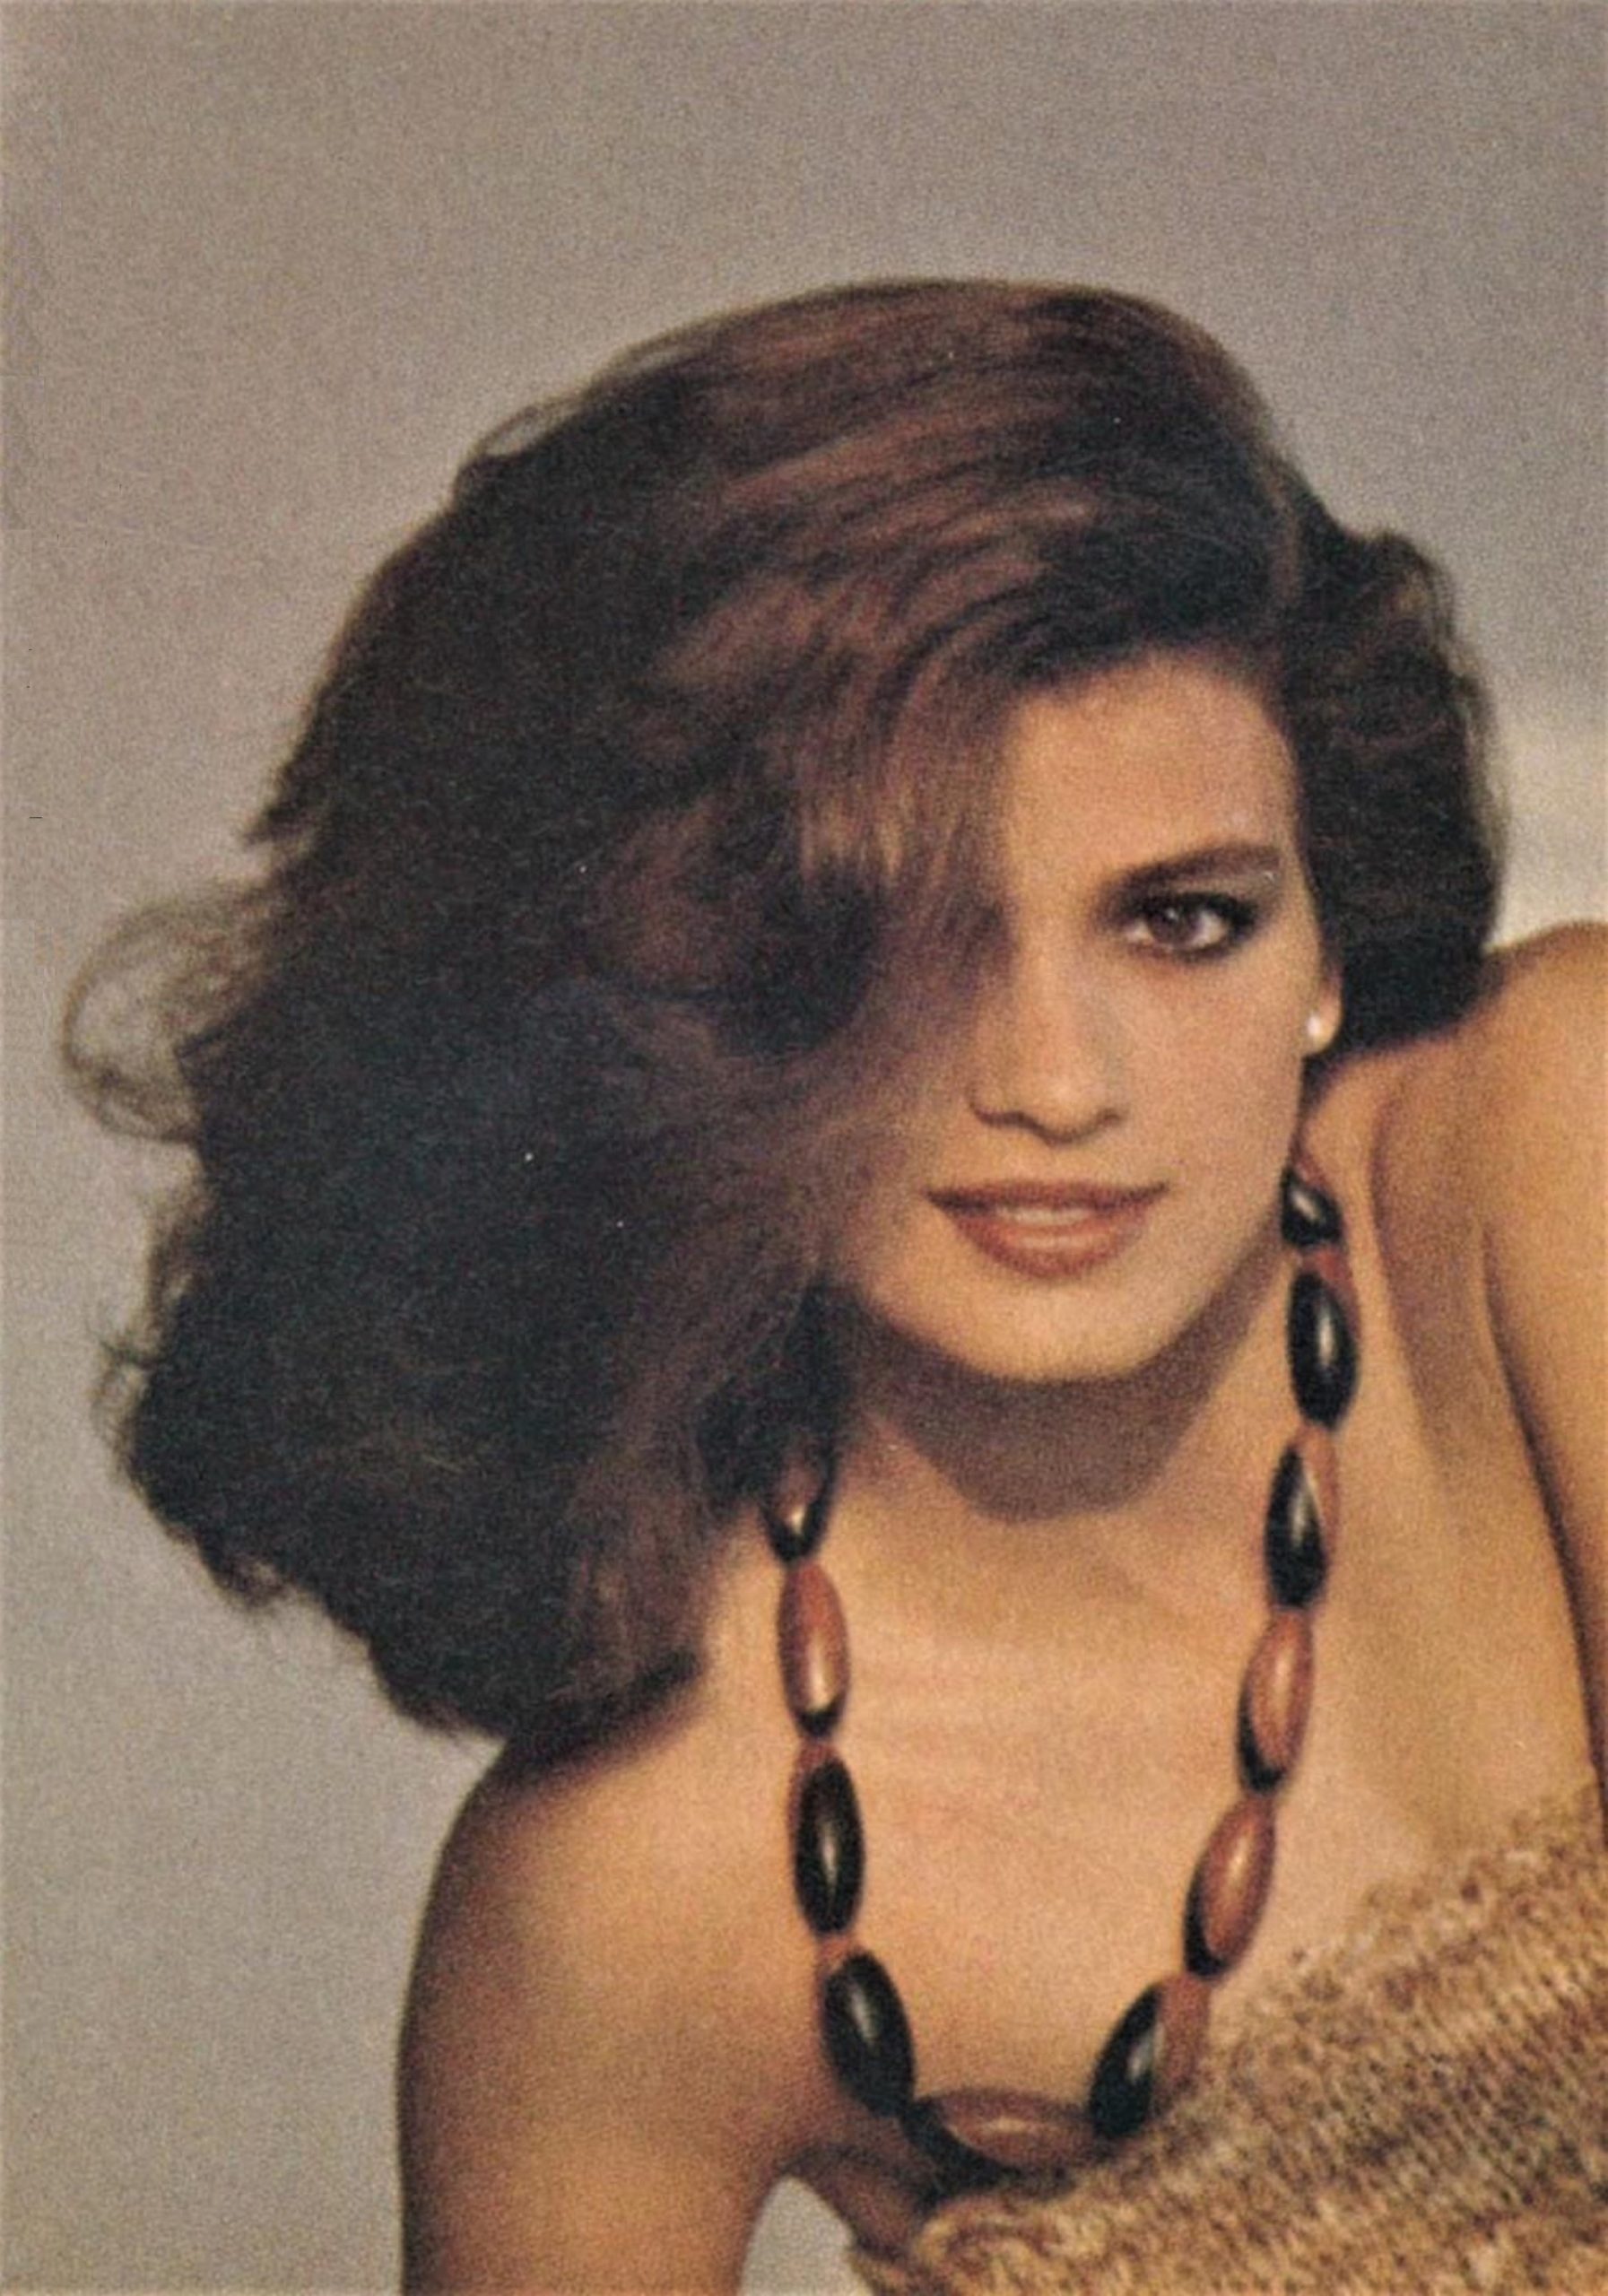 US Vogue November 1980.  Gia Carangi, Kelly Emberg.  Arthur Elgort photographer.